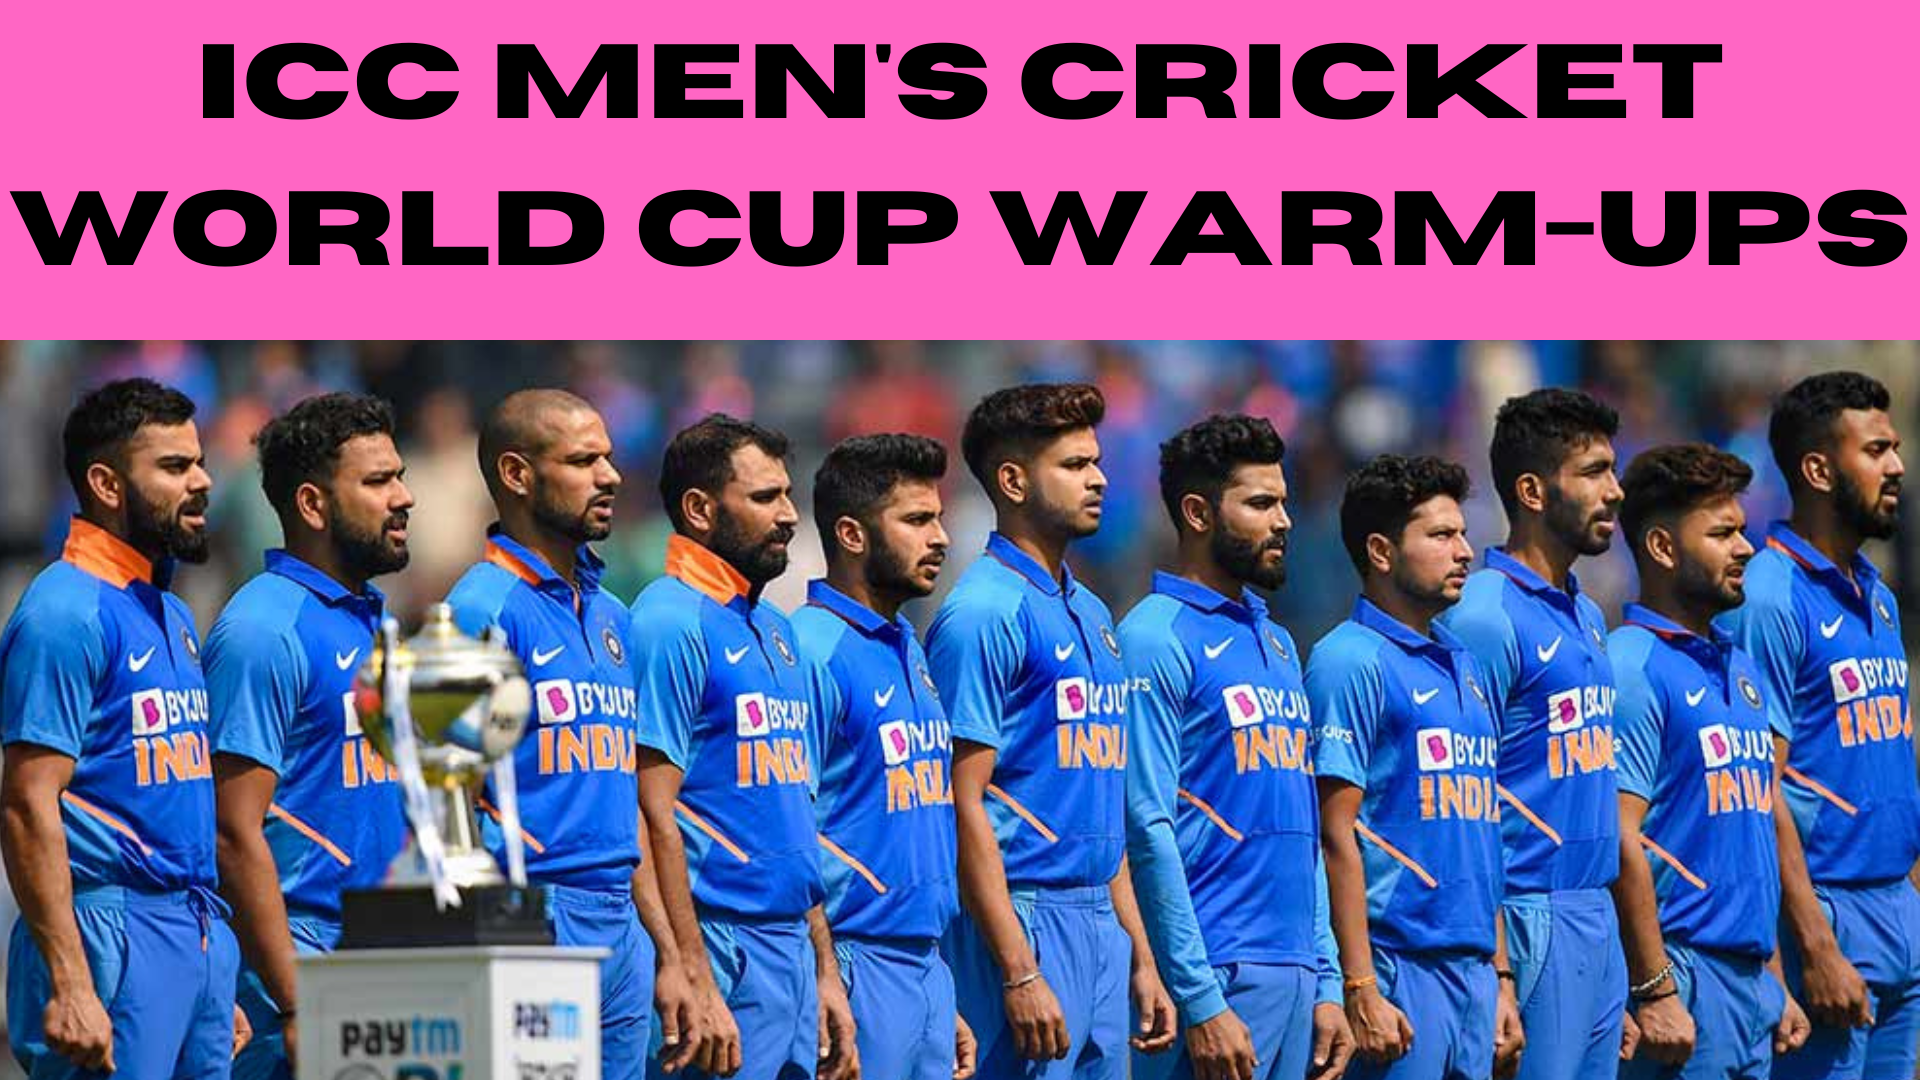 ICC Men's Cricket World Cup Warm-Ups